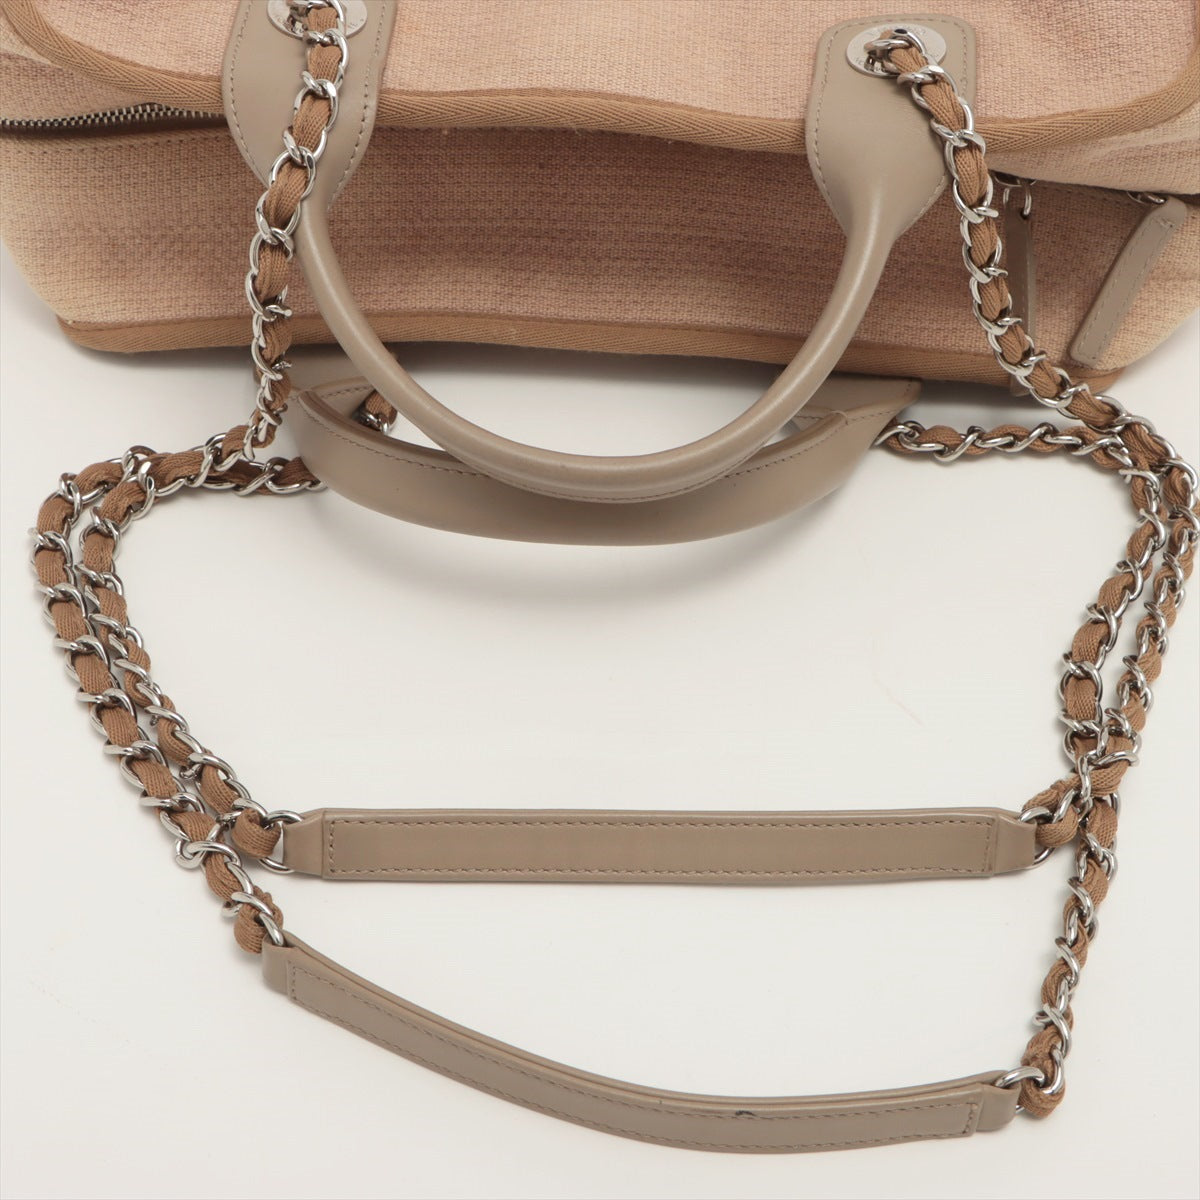 Chanel Deauville Canvas & Leather 2 Way Handbag Beige Silver Metal Fittings 20XXXXXX